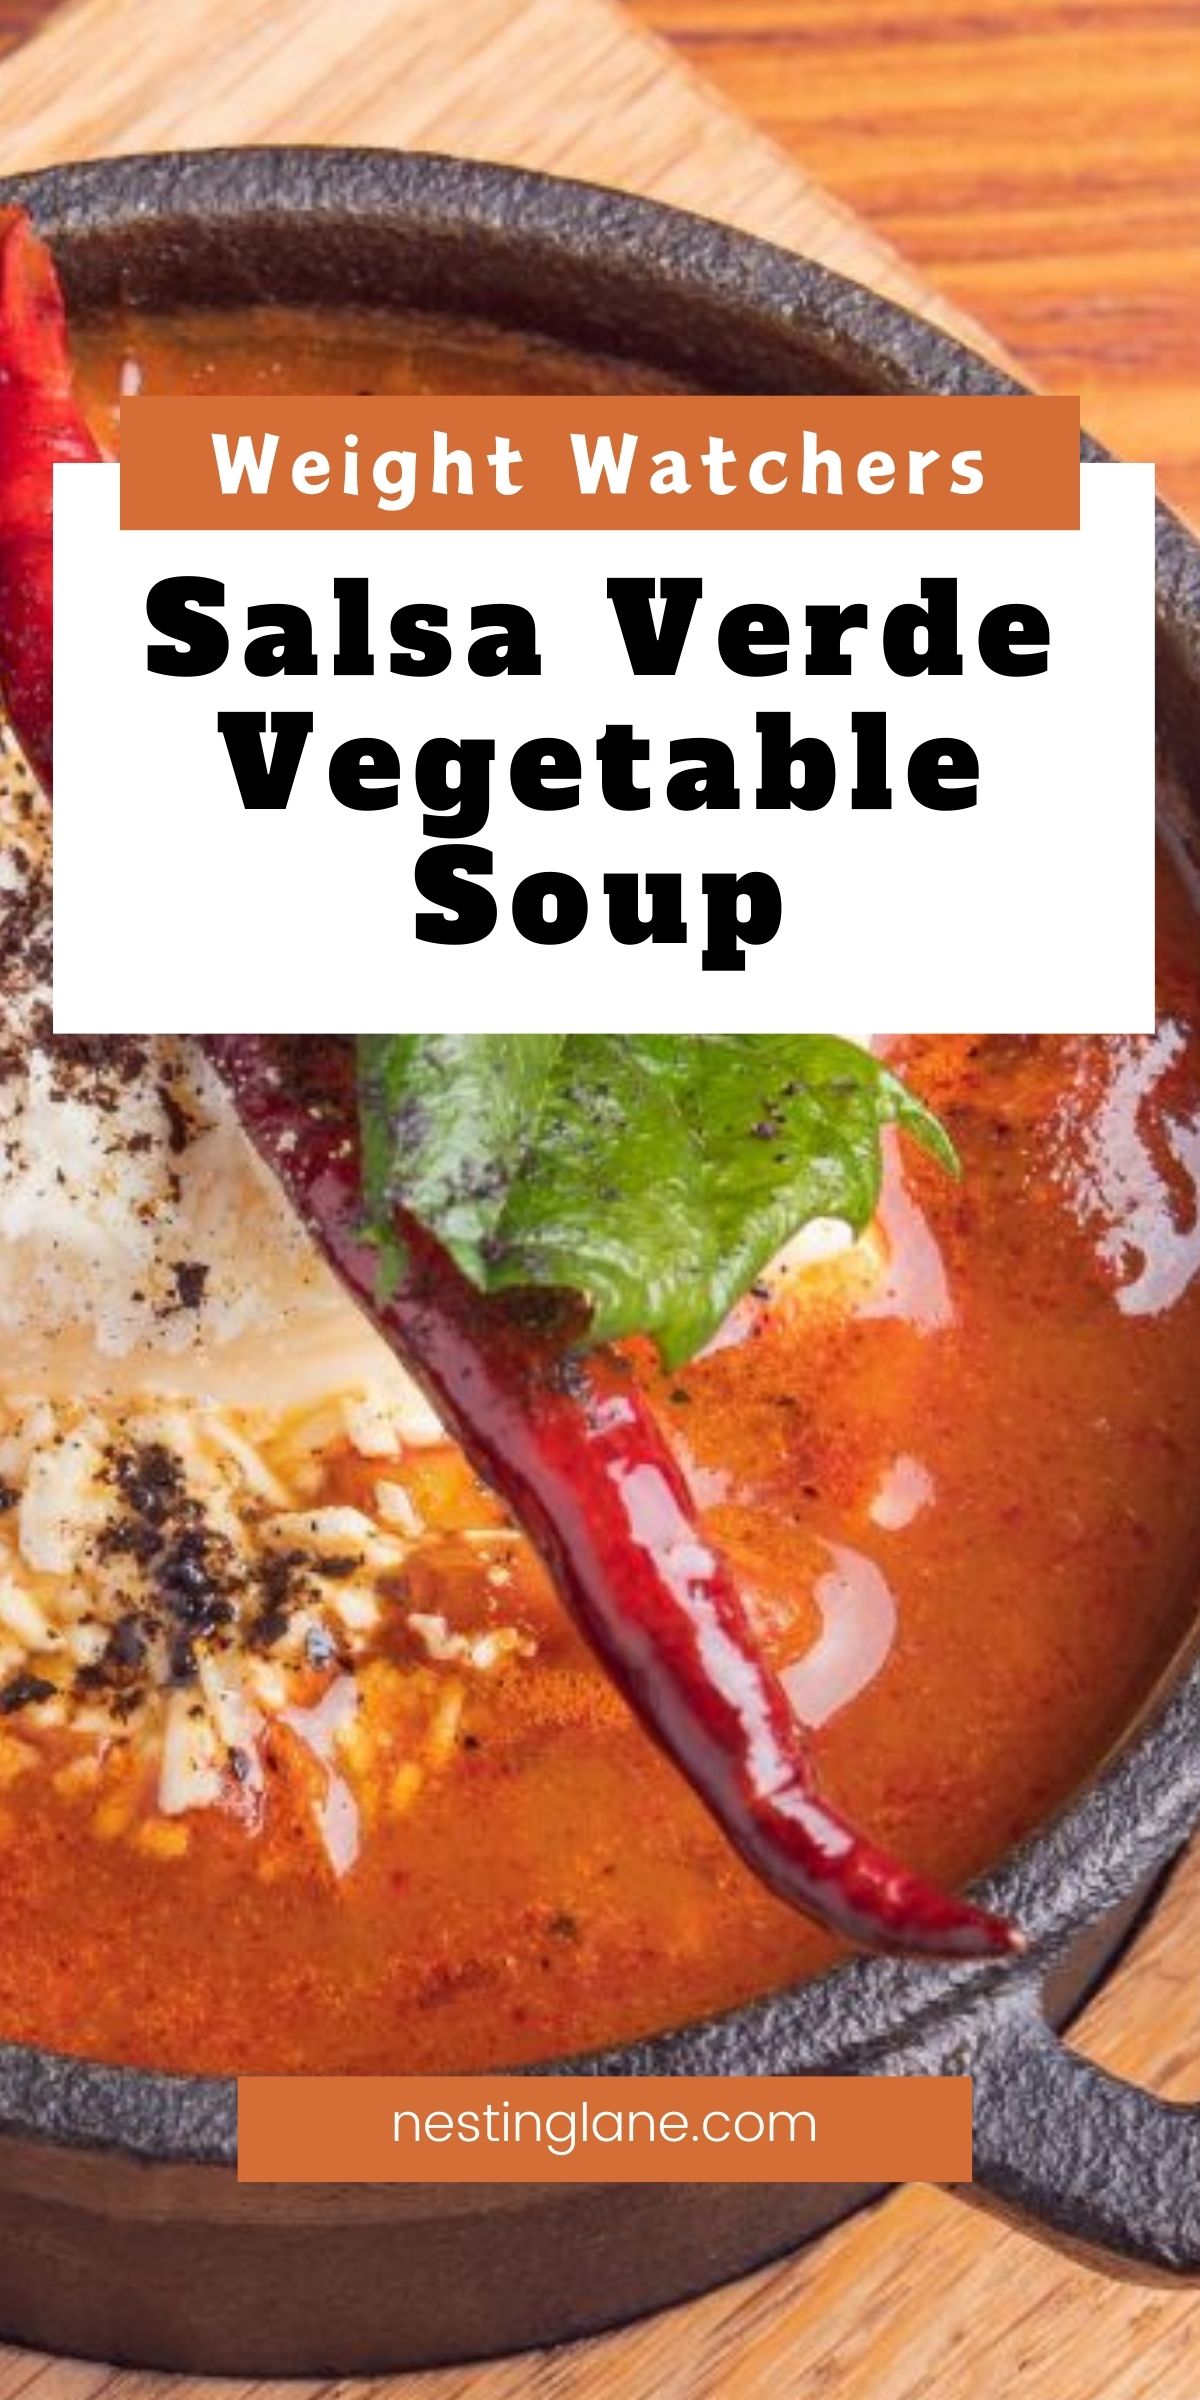 Weight Watchers Salsa Verde Vegetable Soup Recipe graphic.